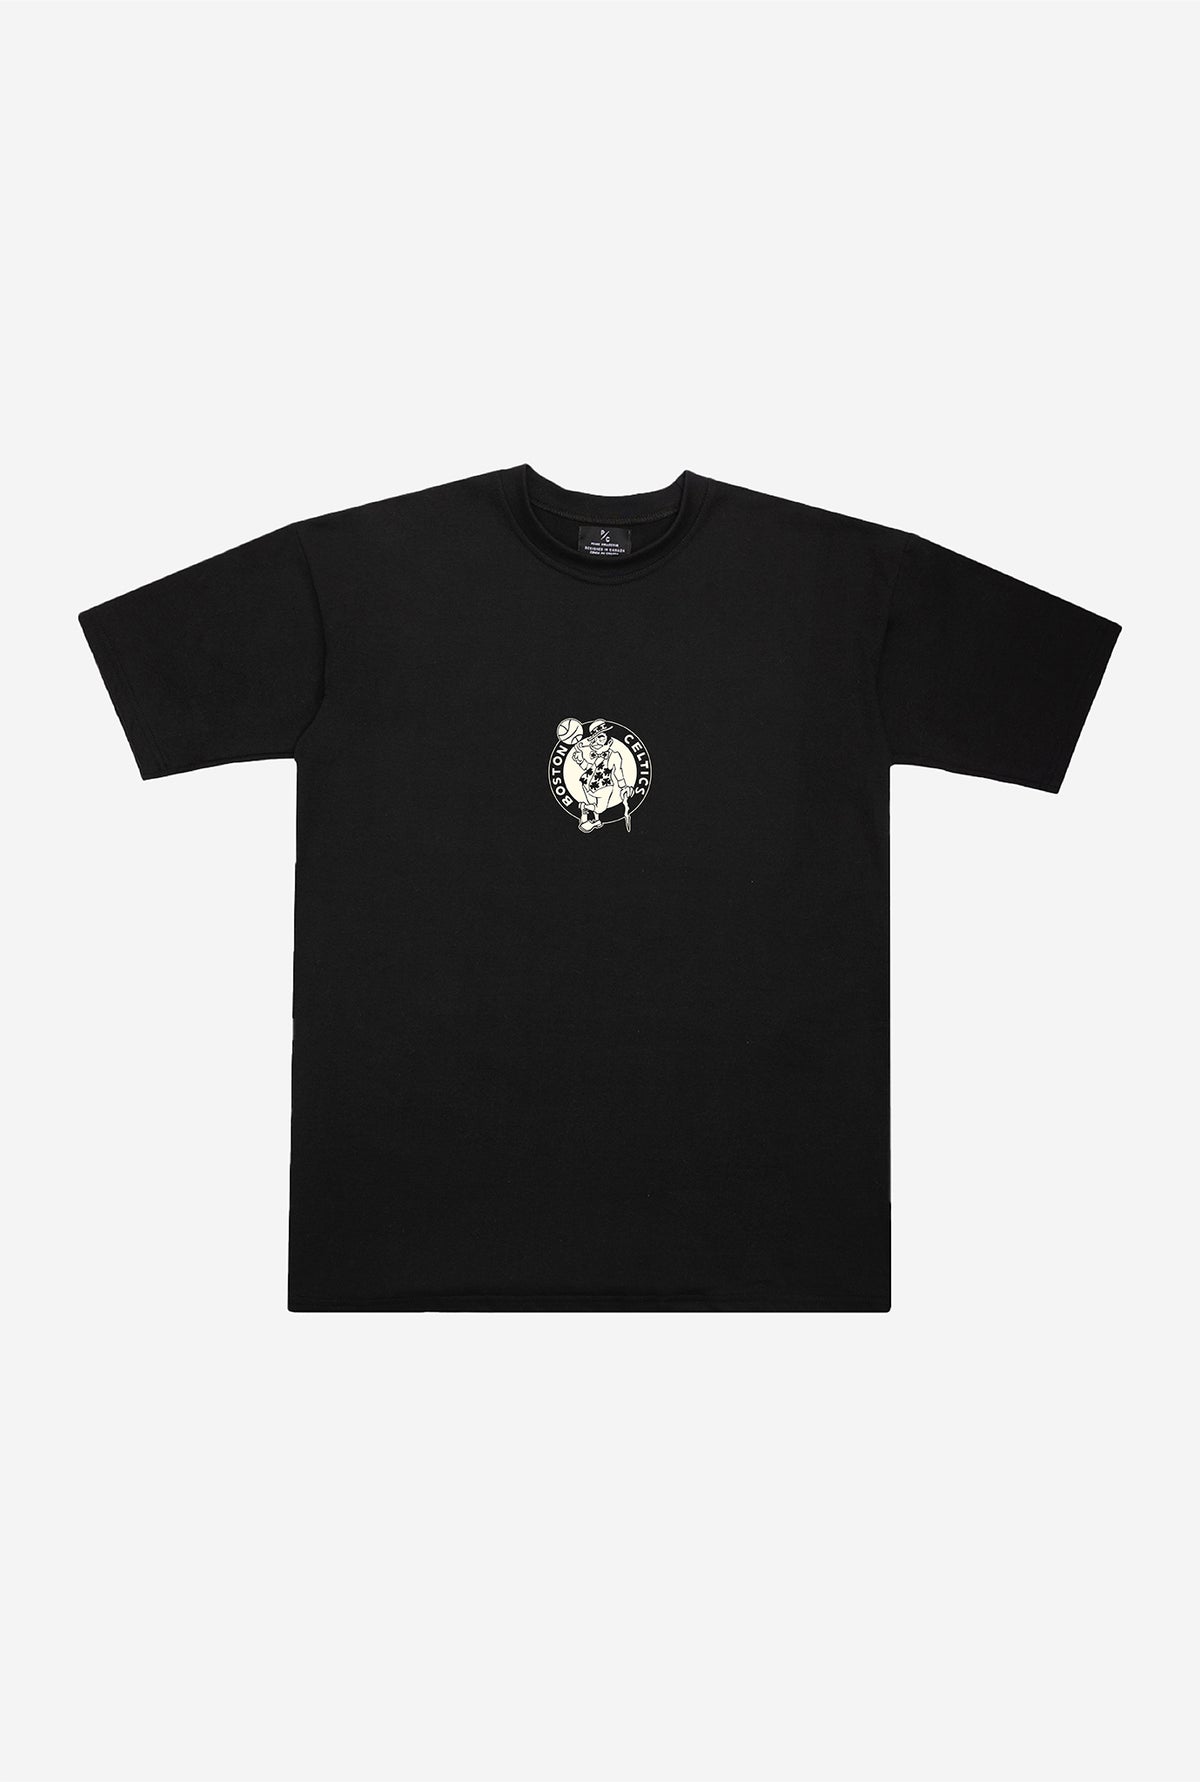 Boston Celtics Premium Heavyweight T-Shirt - Black